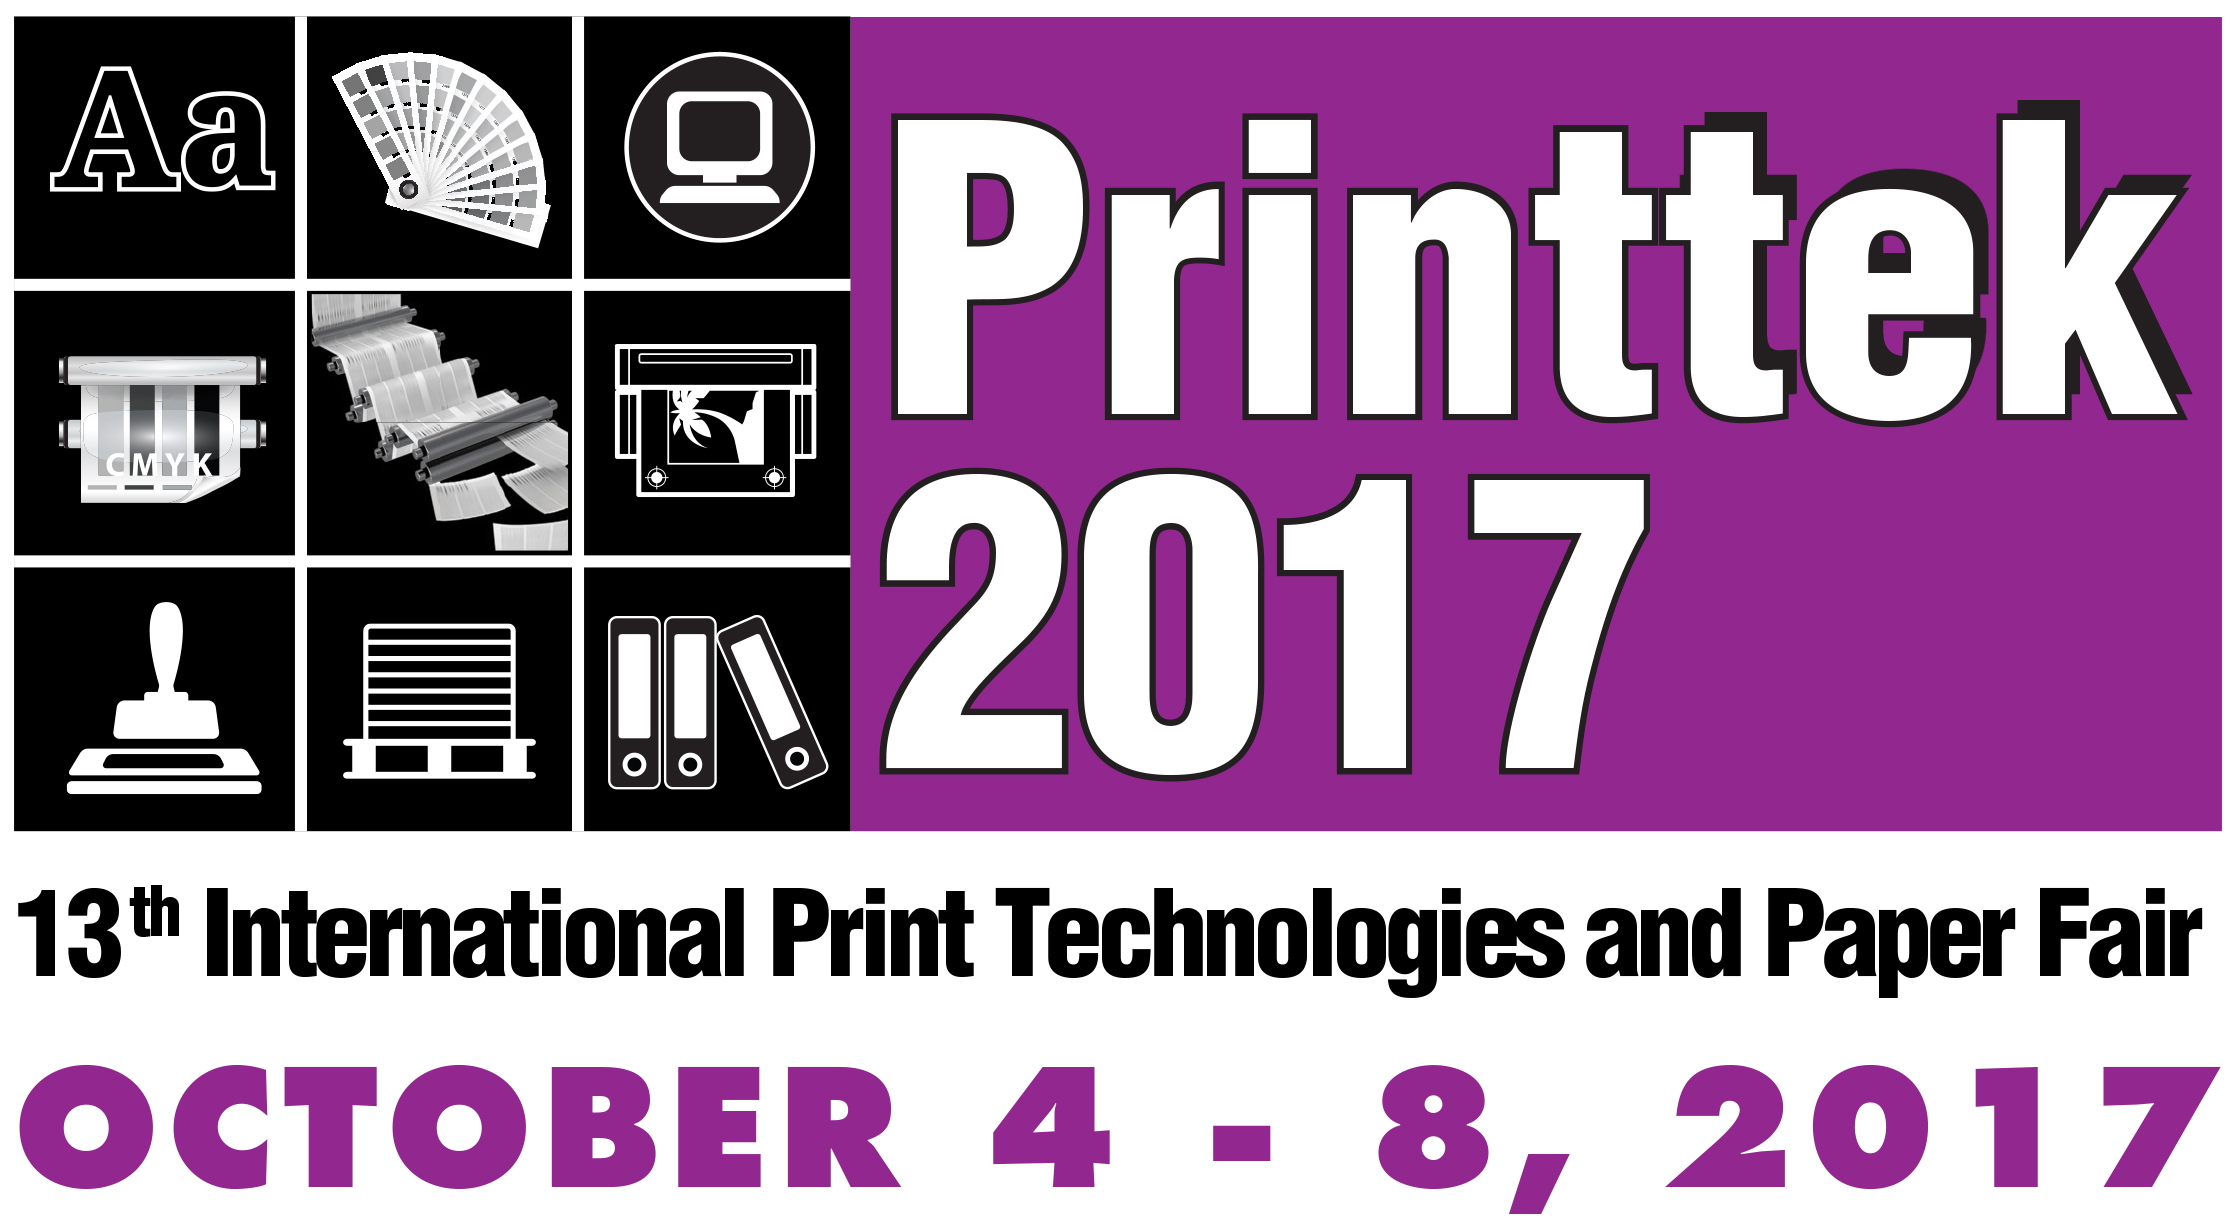 Printtek 2017, 13th International Print Technologies and Paper Fair